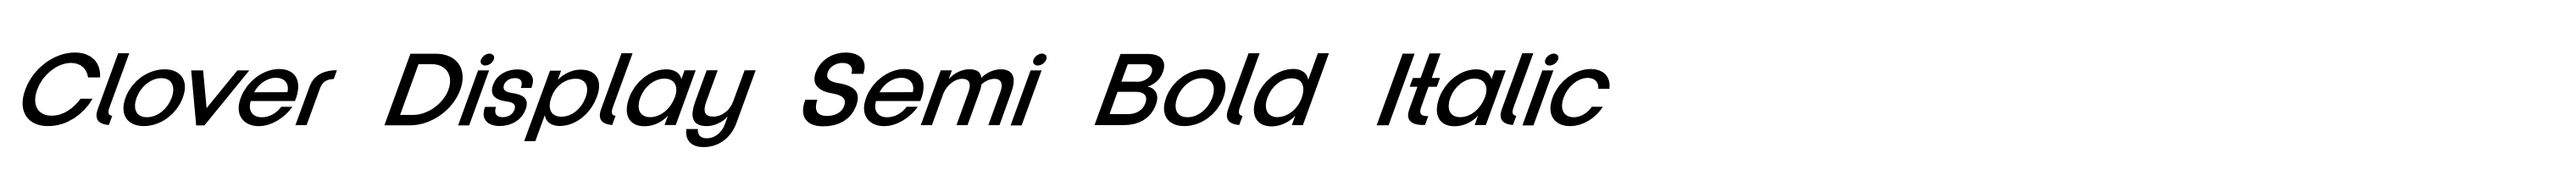 Clover Display Semi Bold Italic